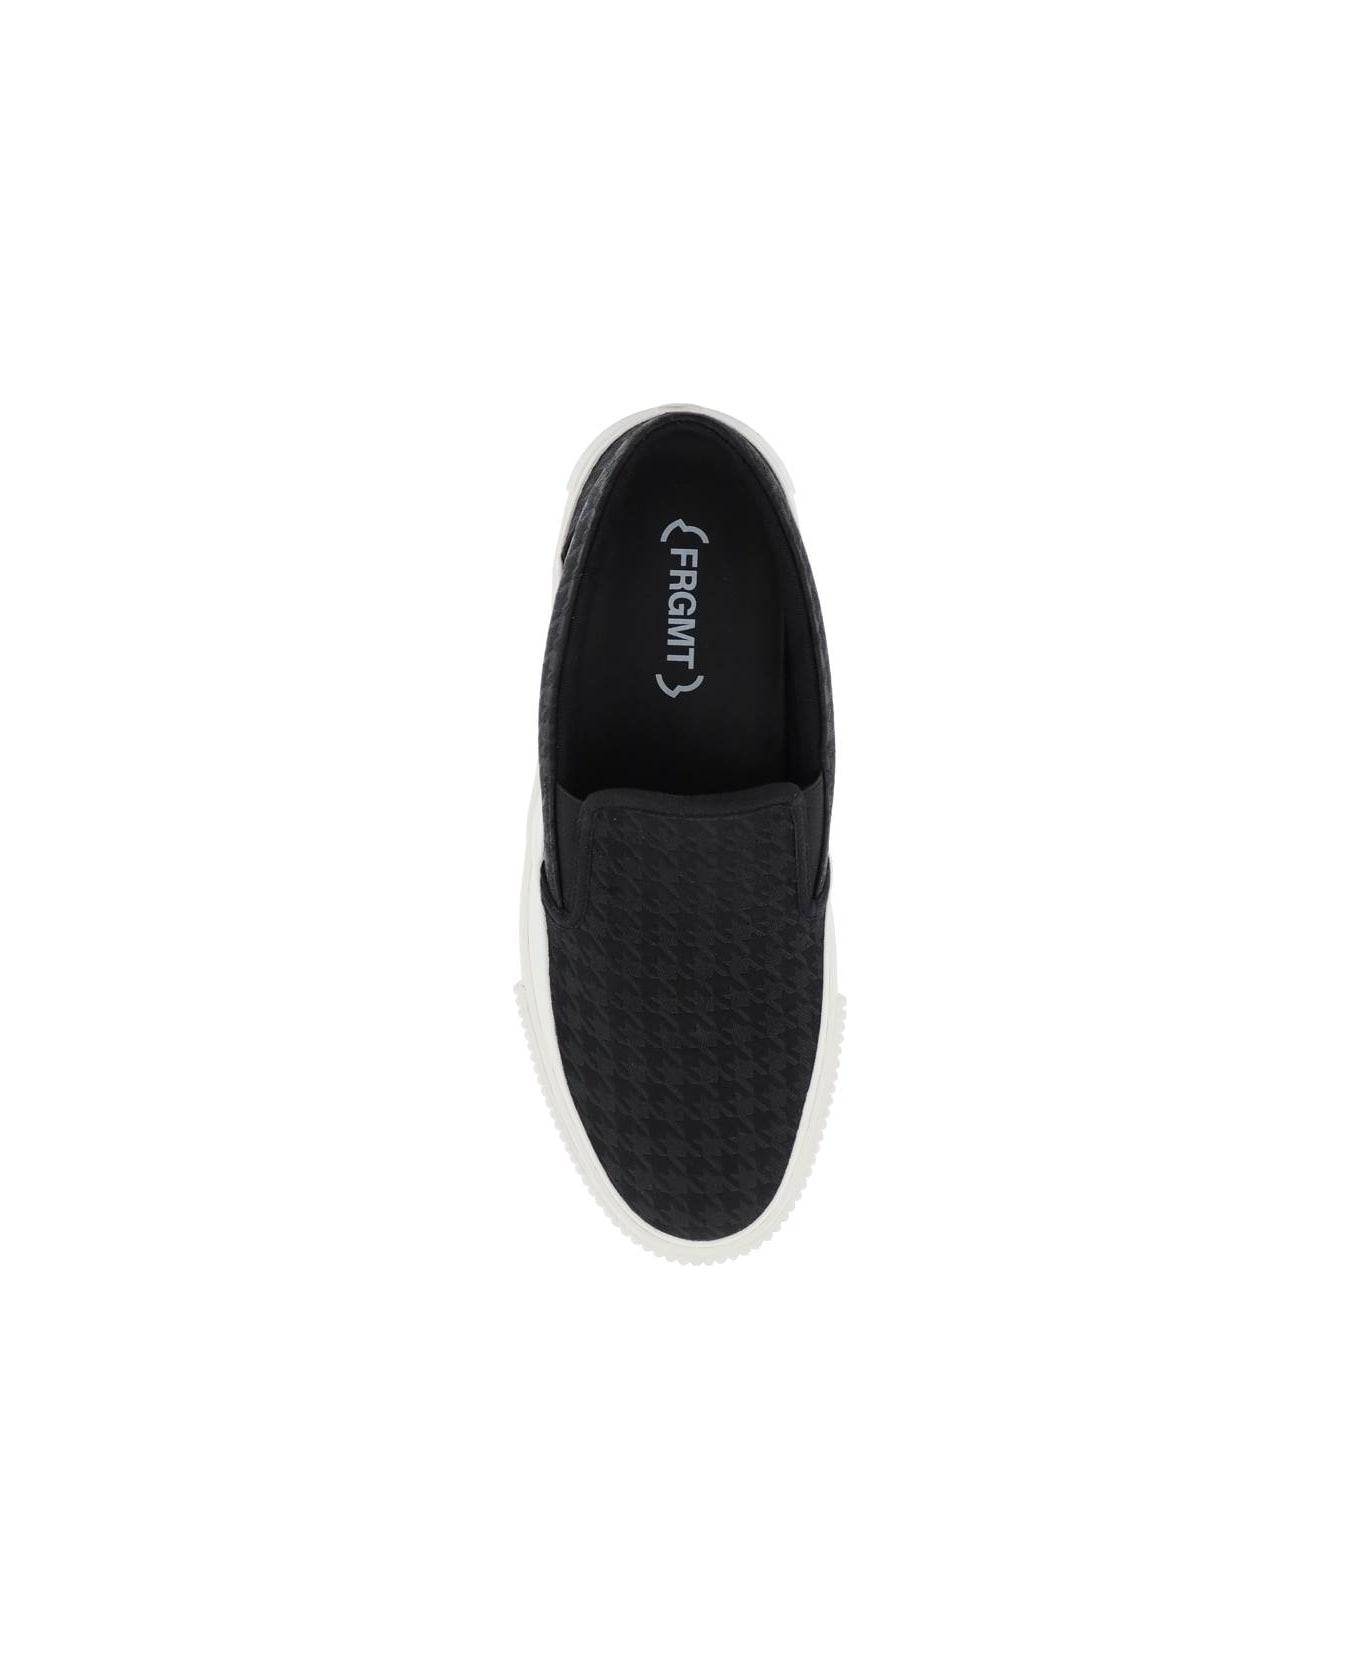 Moncler Genius Moncler X Frgmt - Vulcan Slip-on Sneakers - Black スニーカー